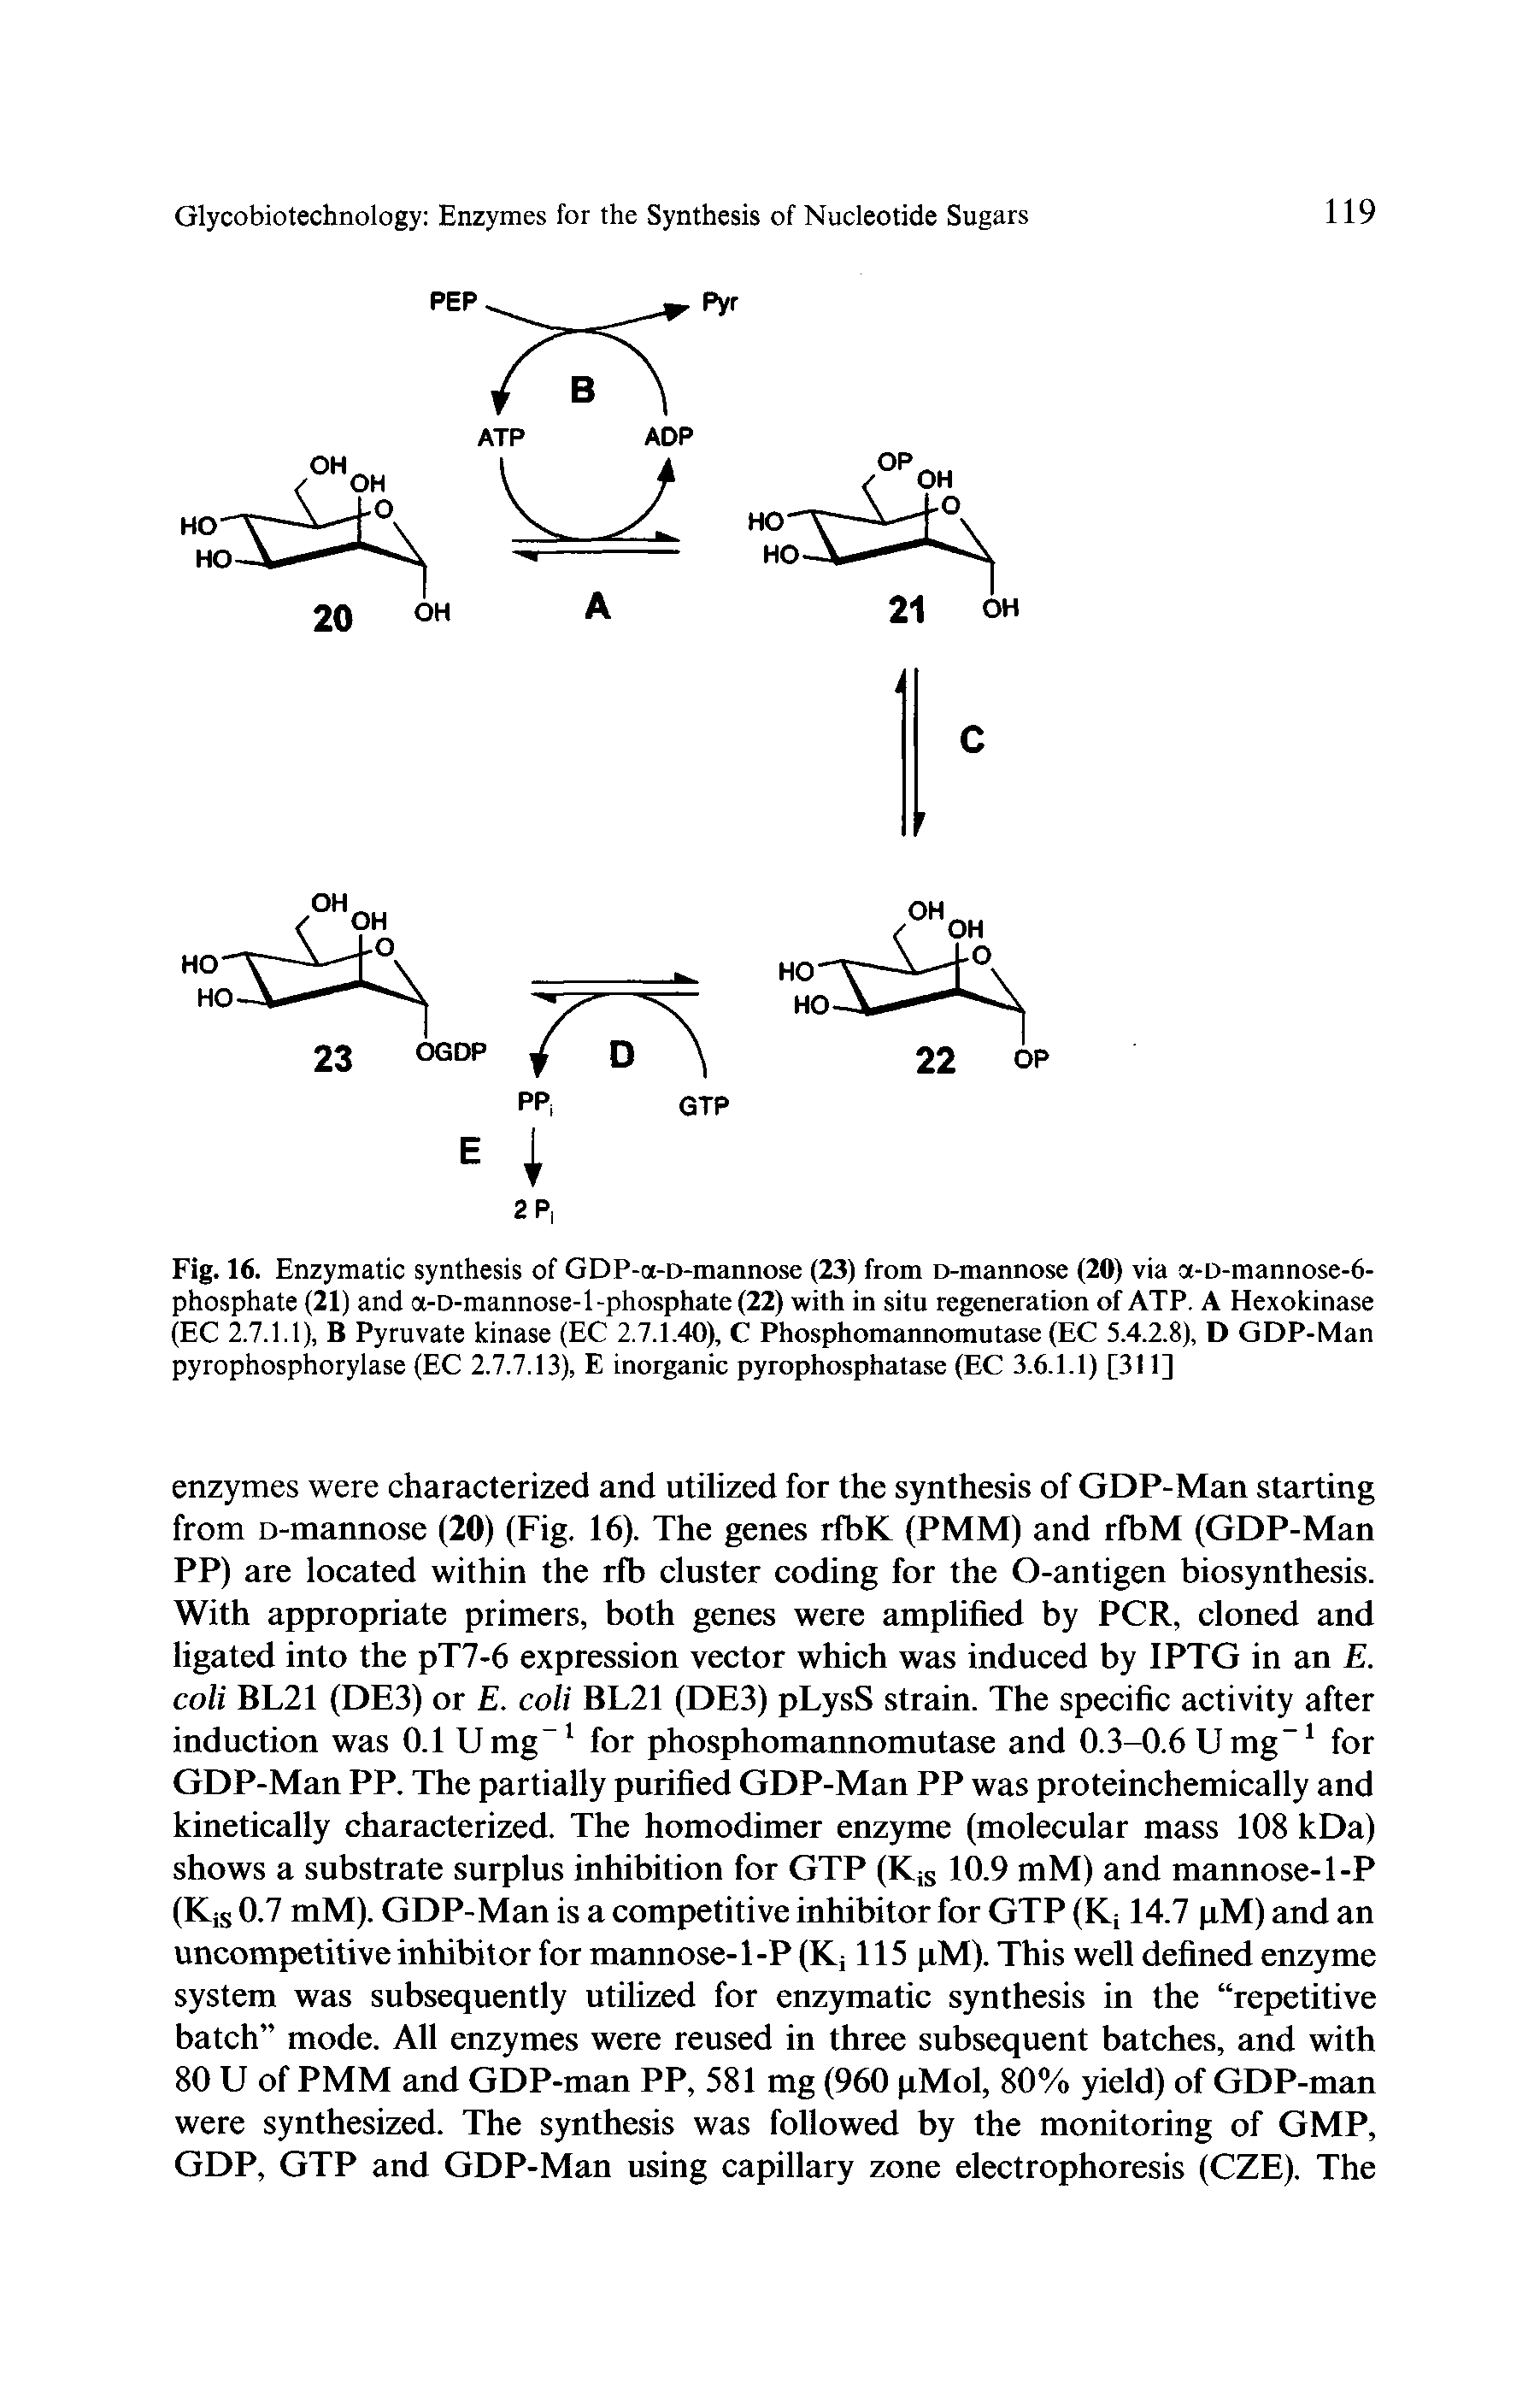 Fig. 16. Enzymatic synthesis of GDP-a-D-mannose (23) from D-mannose (20) via a-D-mannose-6-phosphate (21) and ot-D-mannose-1 -phosphate (22) with in situ regeneration of ATP. A Hexokinase (EC 2.7.1.1), B Pyruvate kinase (EC 2.7.1.40), C Phosphomannomutase (EC 5.4.2.8), D GDP-Man pyrophosphorylase (EC 2.7.7.13), E inorganic pyrophosphatase (EC 3.6.1.1) [311]...